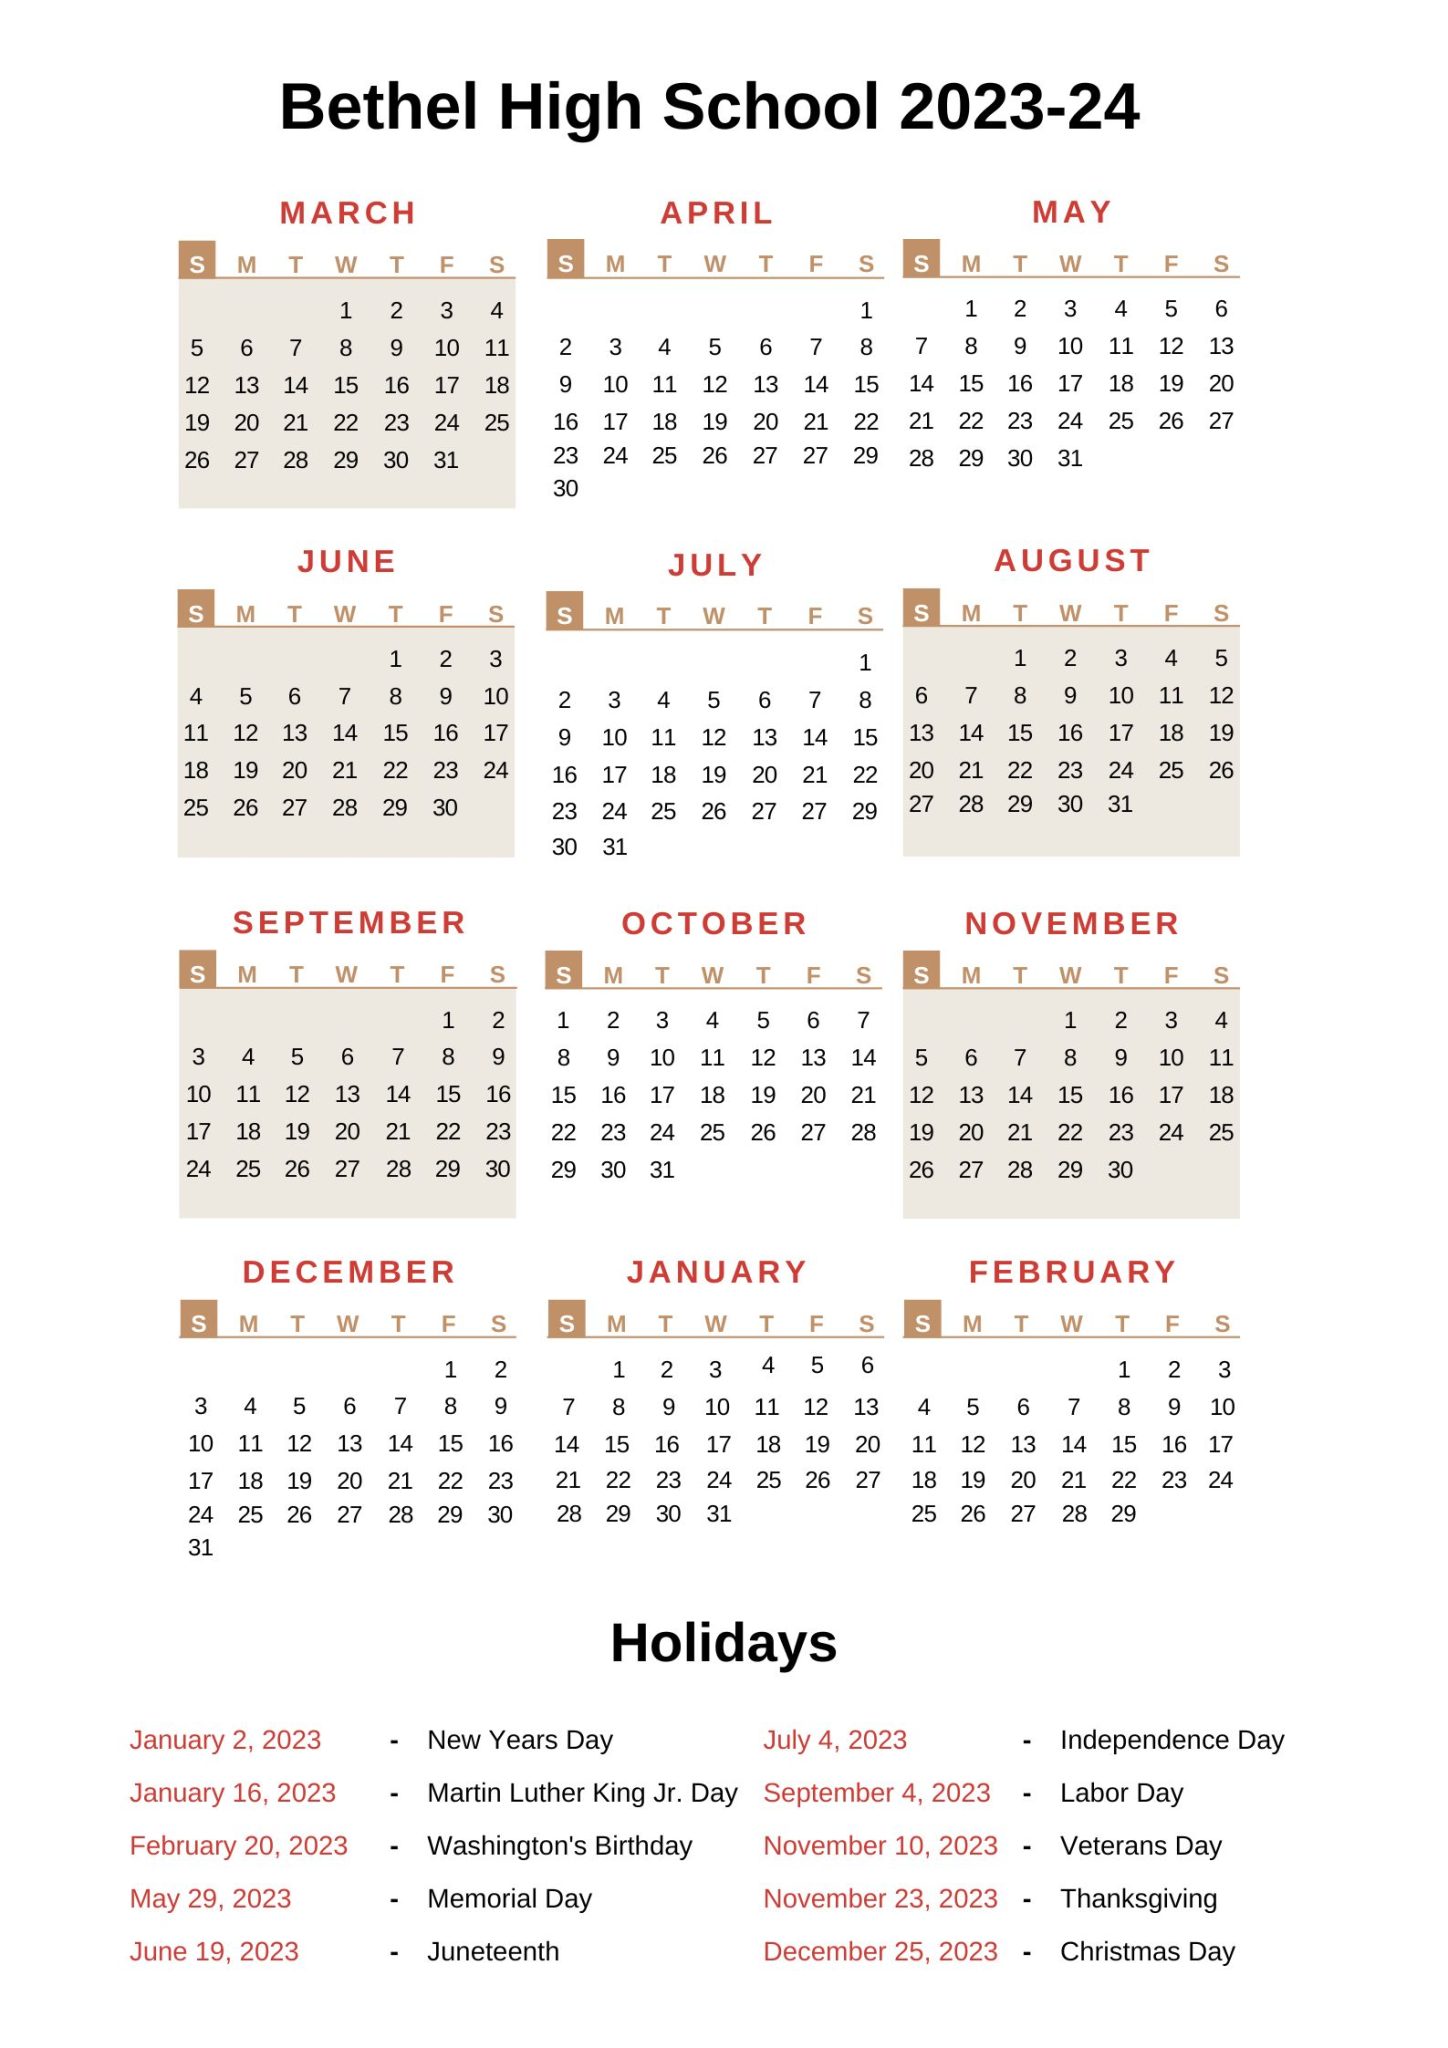 Bethel High School Calendar BHS 2023 24 With Holidays